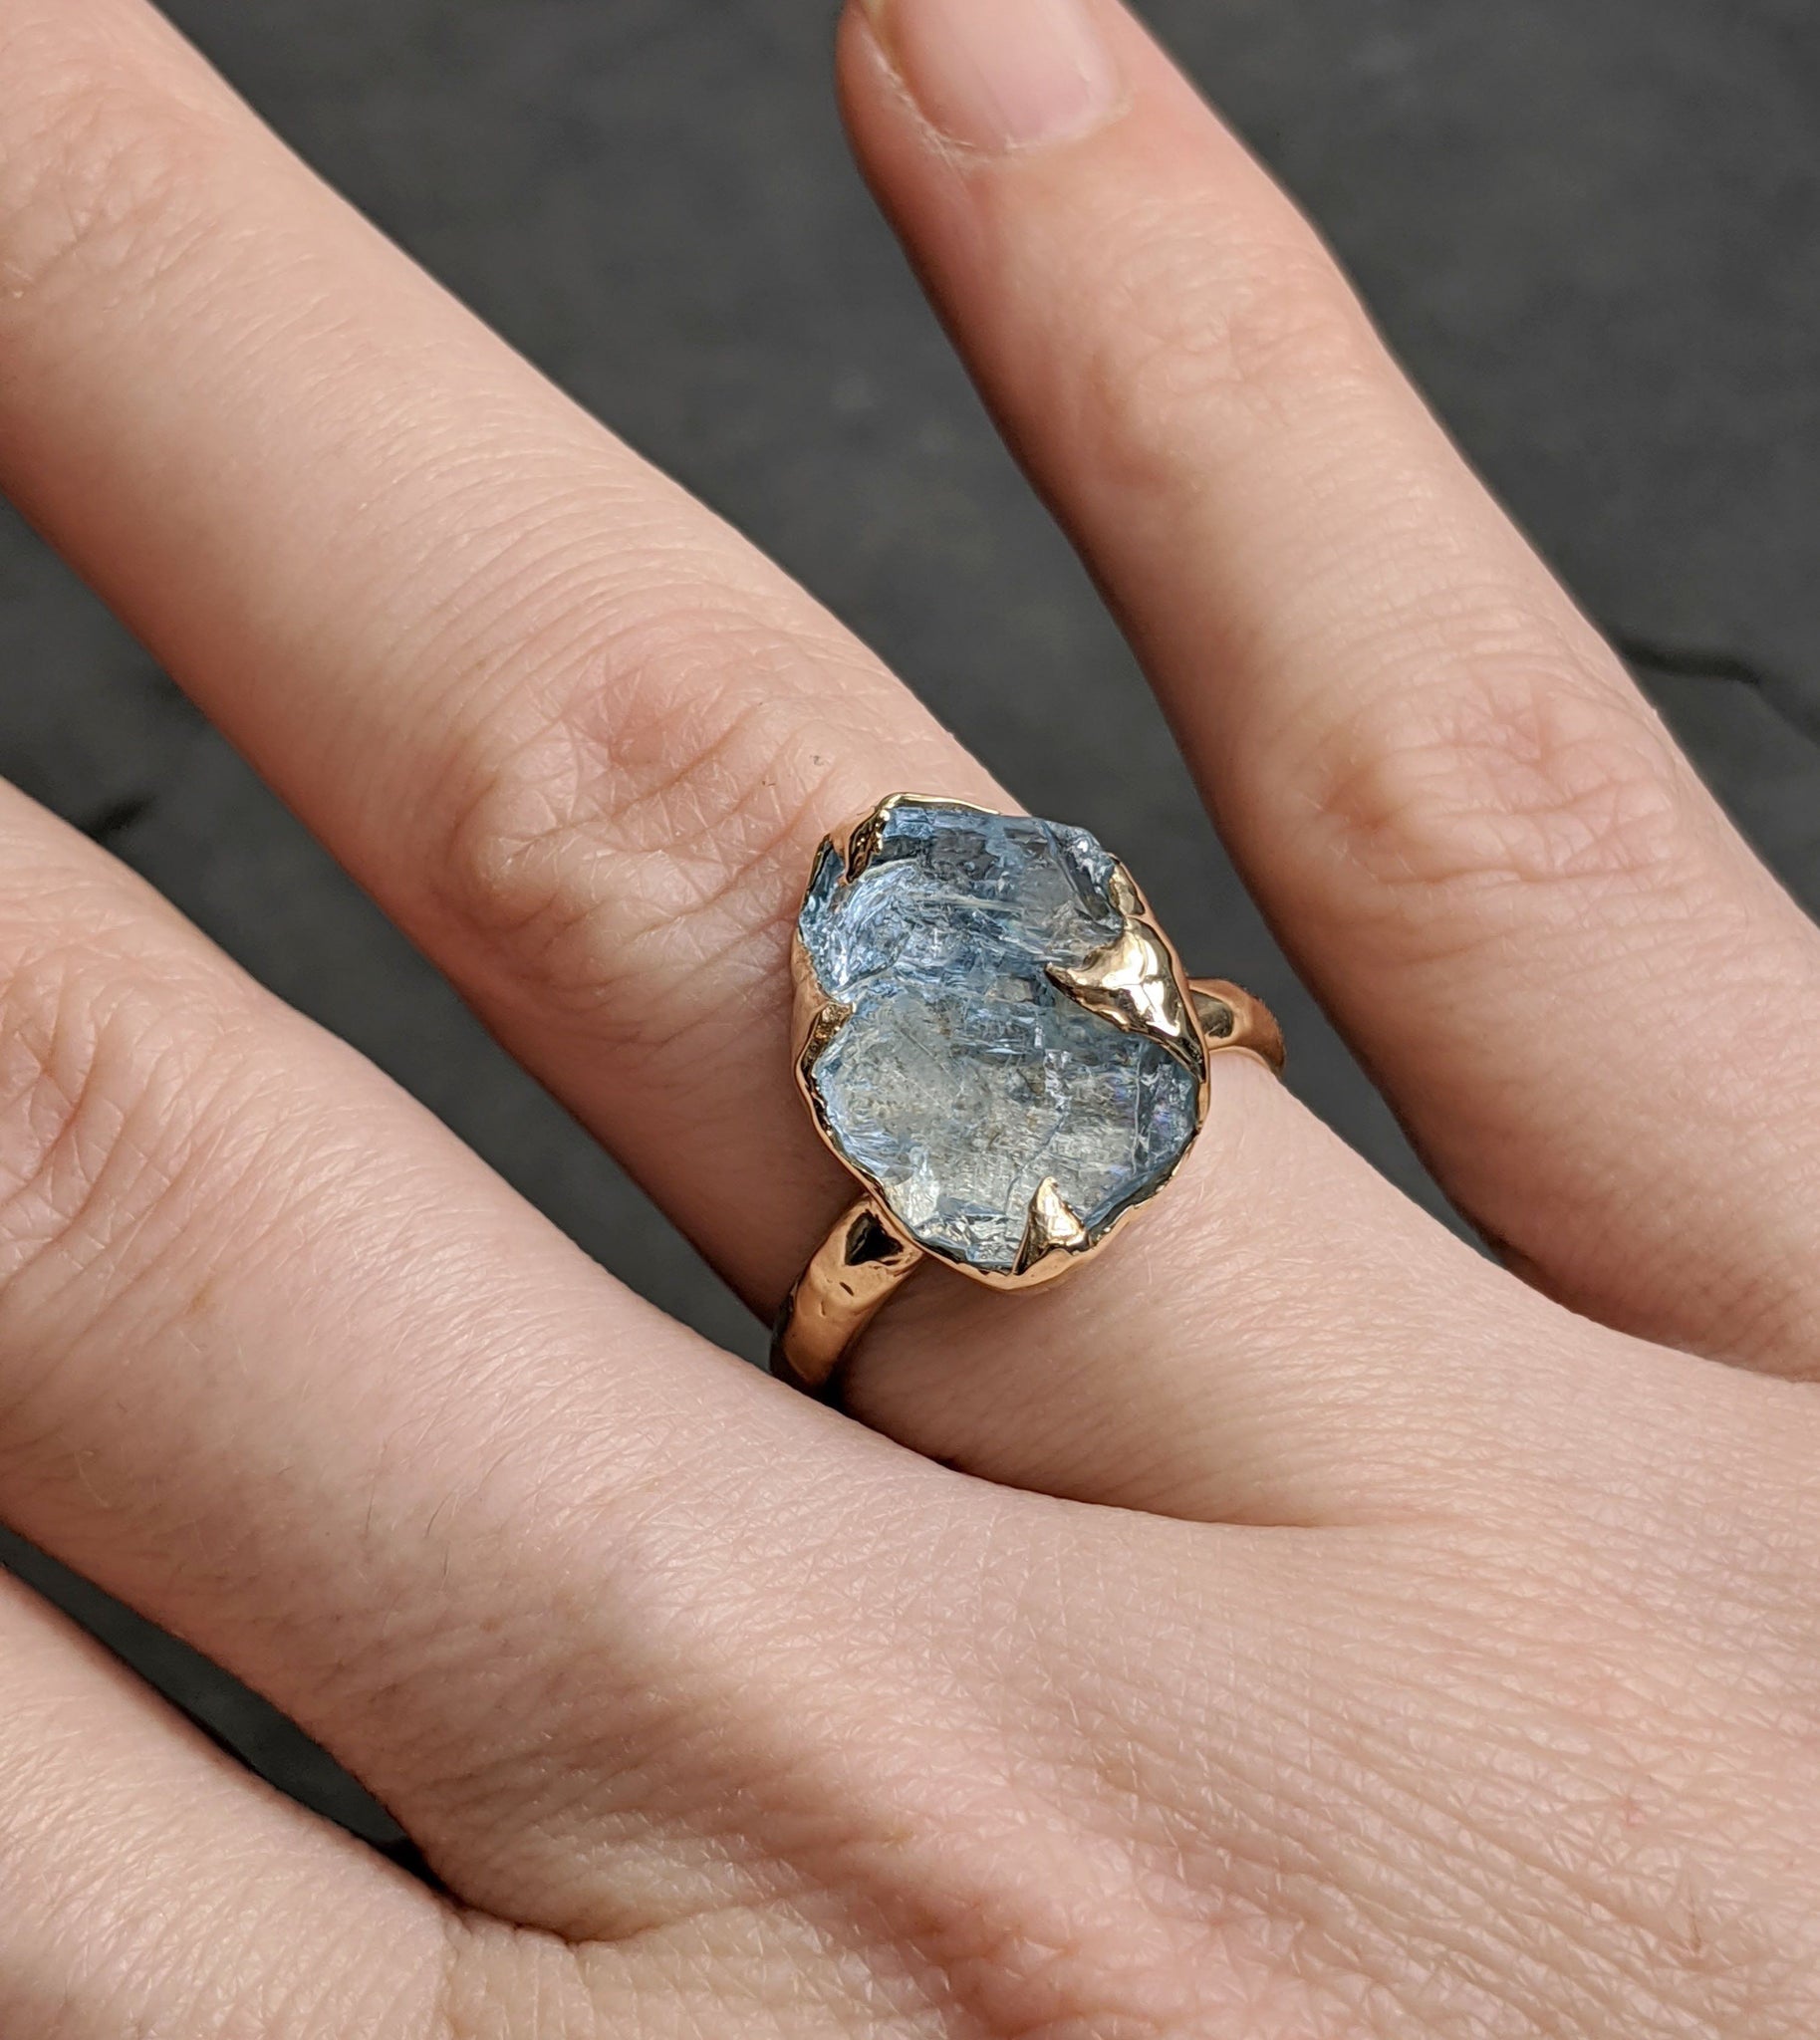 raw uncut aquamarine solitaire 14k yellow gold ring custom one of a kind gemstone ring bespoke byangeline 2093 Alternative Engagement